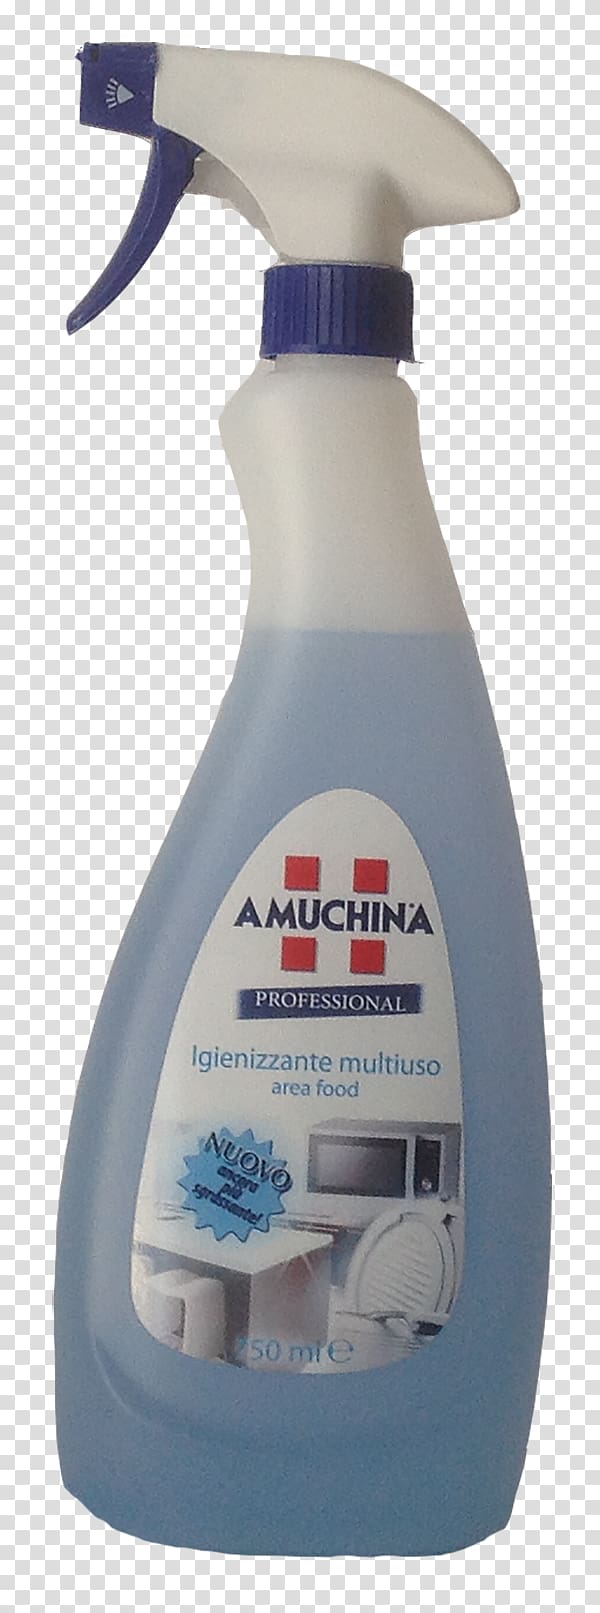 Bleach Product Detergent Disinfectants Sodium hypochlorite, Multiuso Pi transparent background PNG clipart